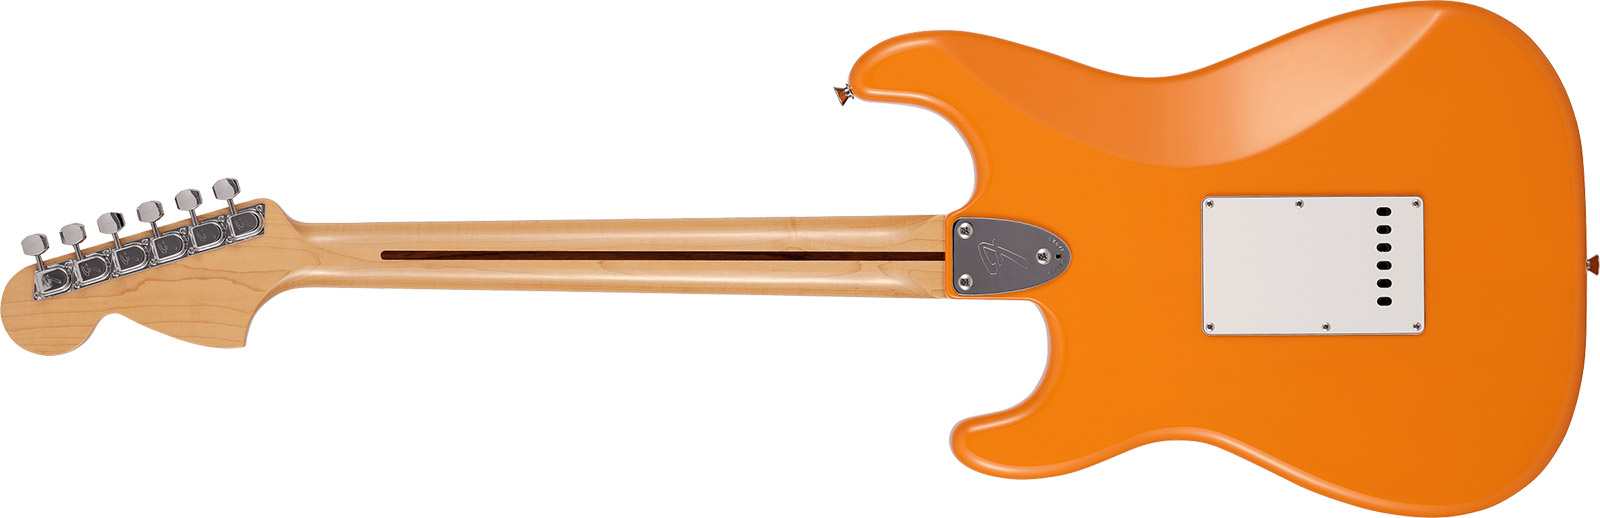 Fender Strat International Color Ltd Jap 3s Trem Rw - Capri Orange - Elektrische gitaar in Str-vorm - Variation 1